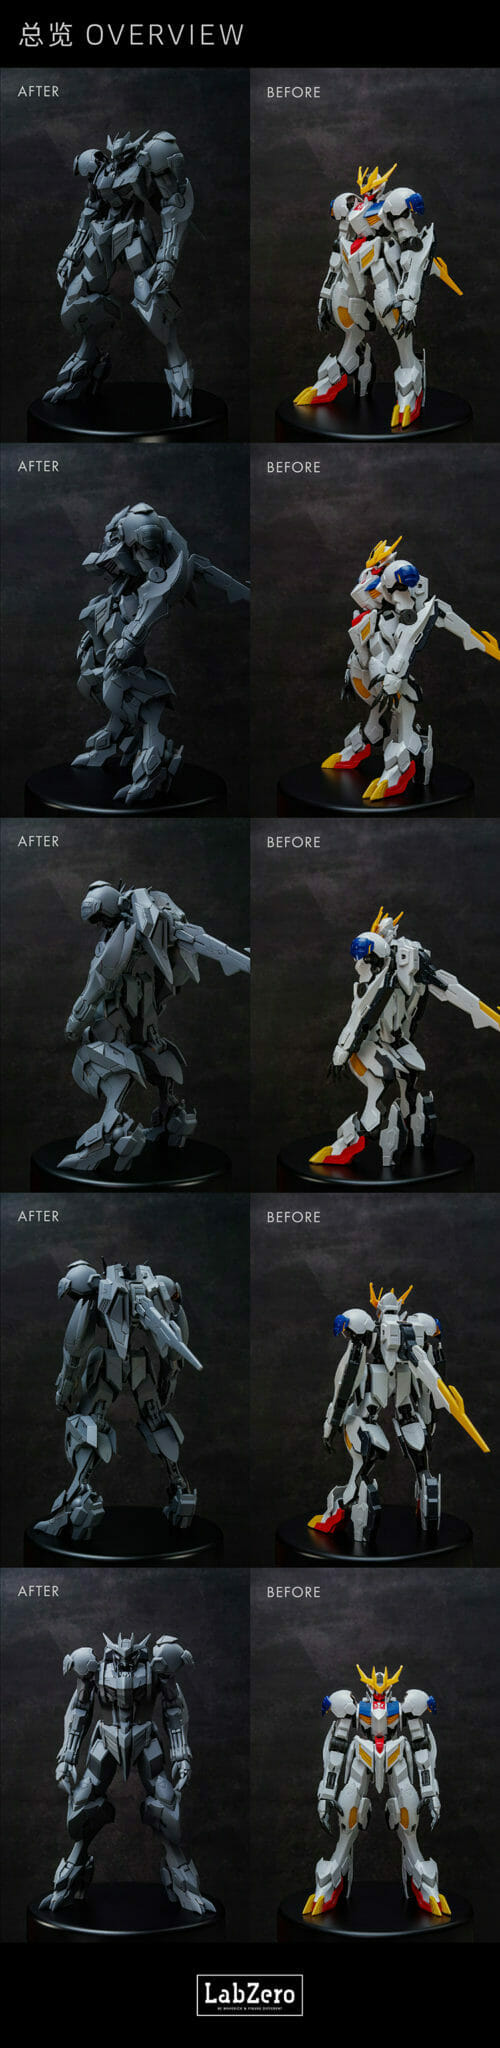 LabZero 1:100 Gundam Barbatos Lupus Rex Conversion Kit